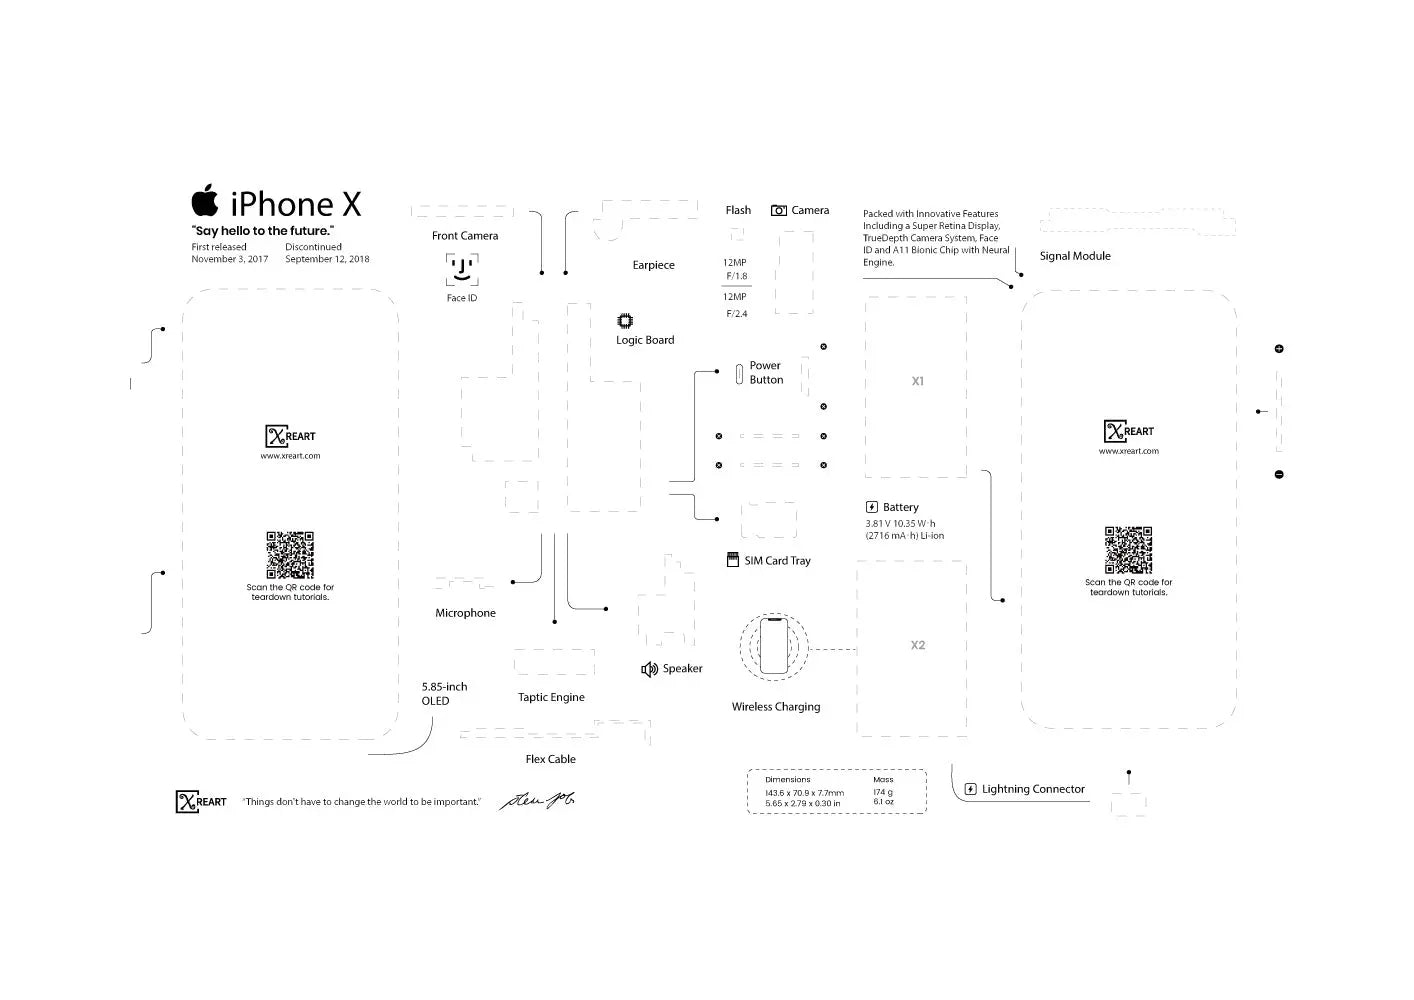 iphone 5 dimensions pdf